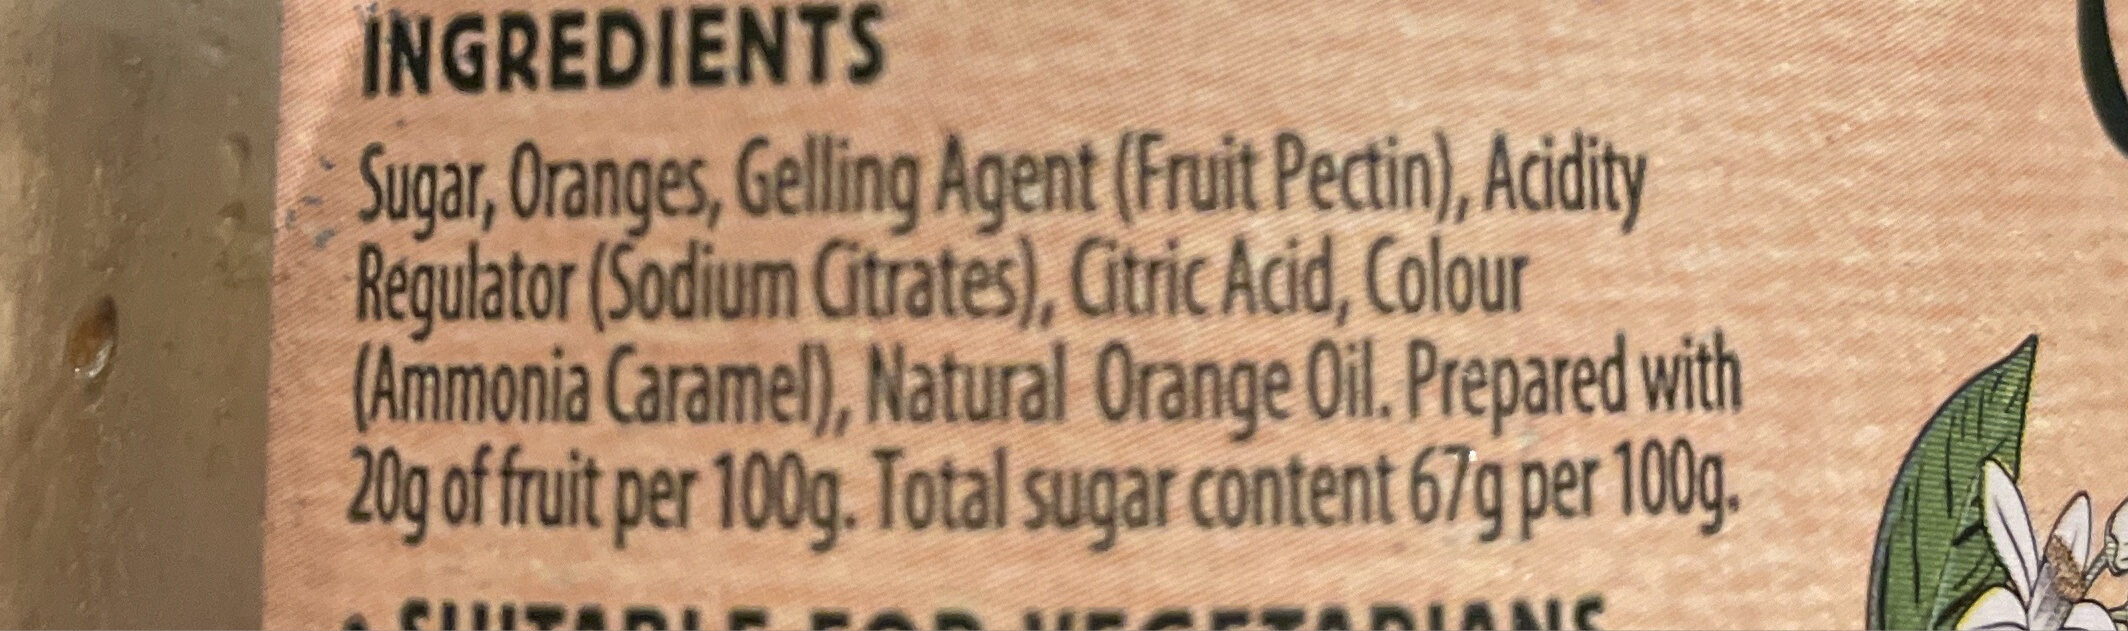 Orange marmalade - Ingredients